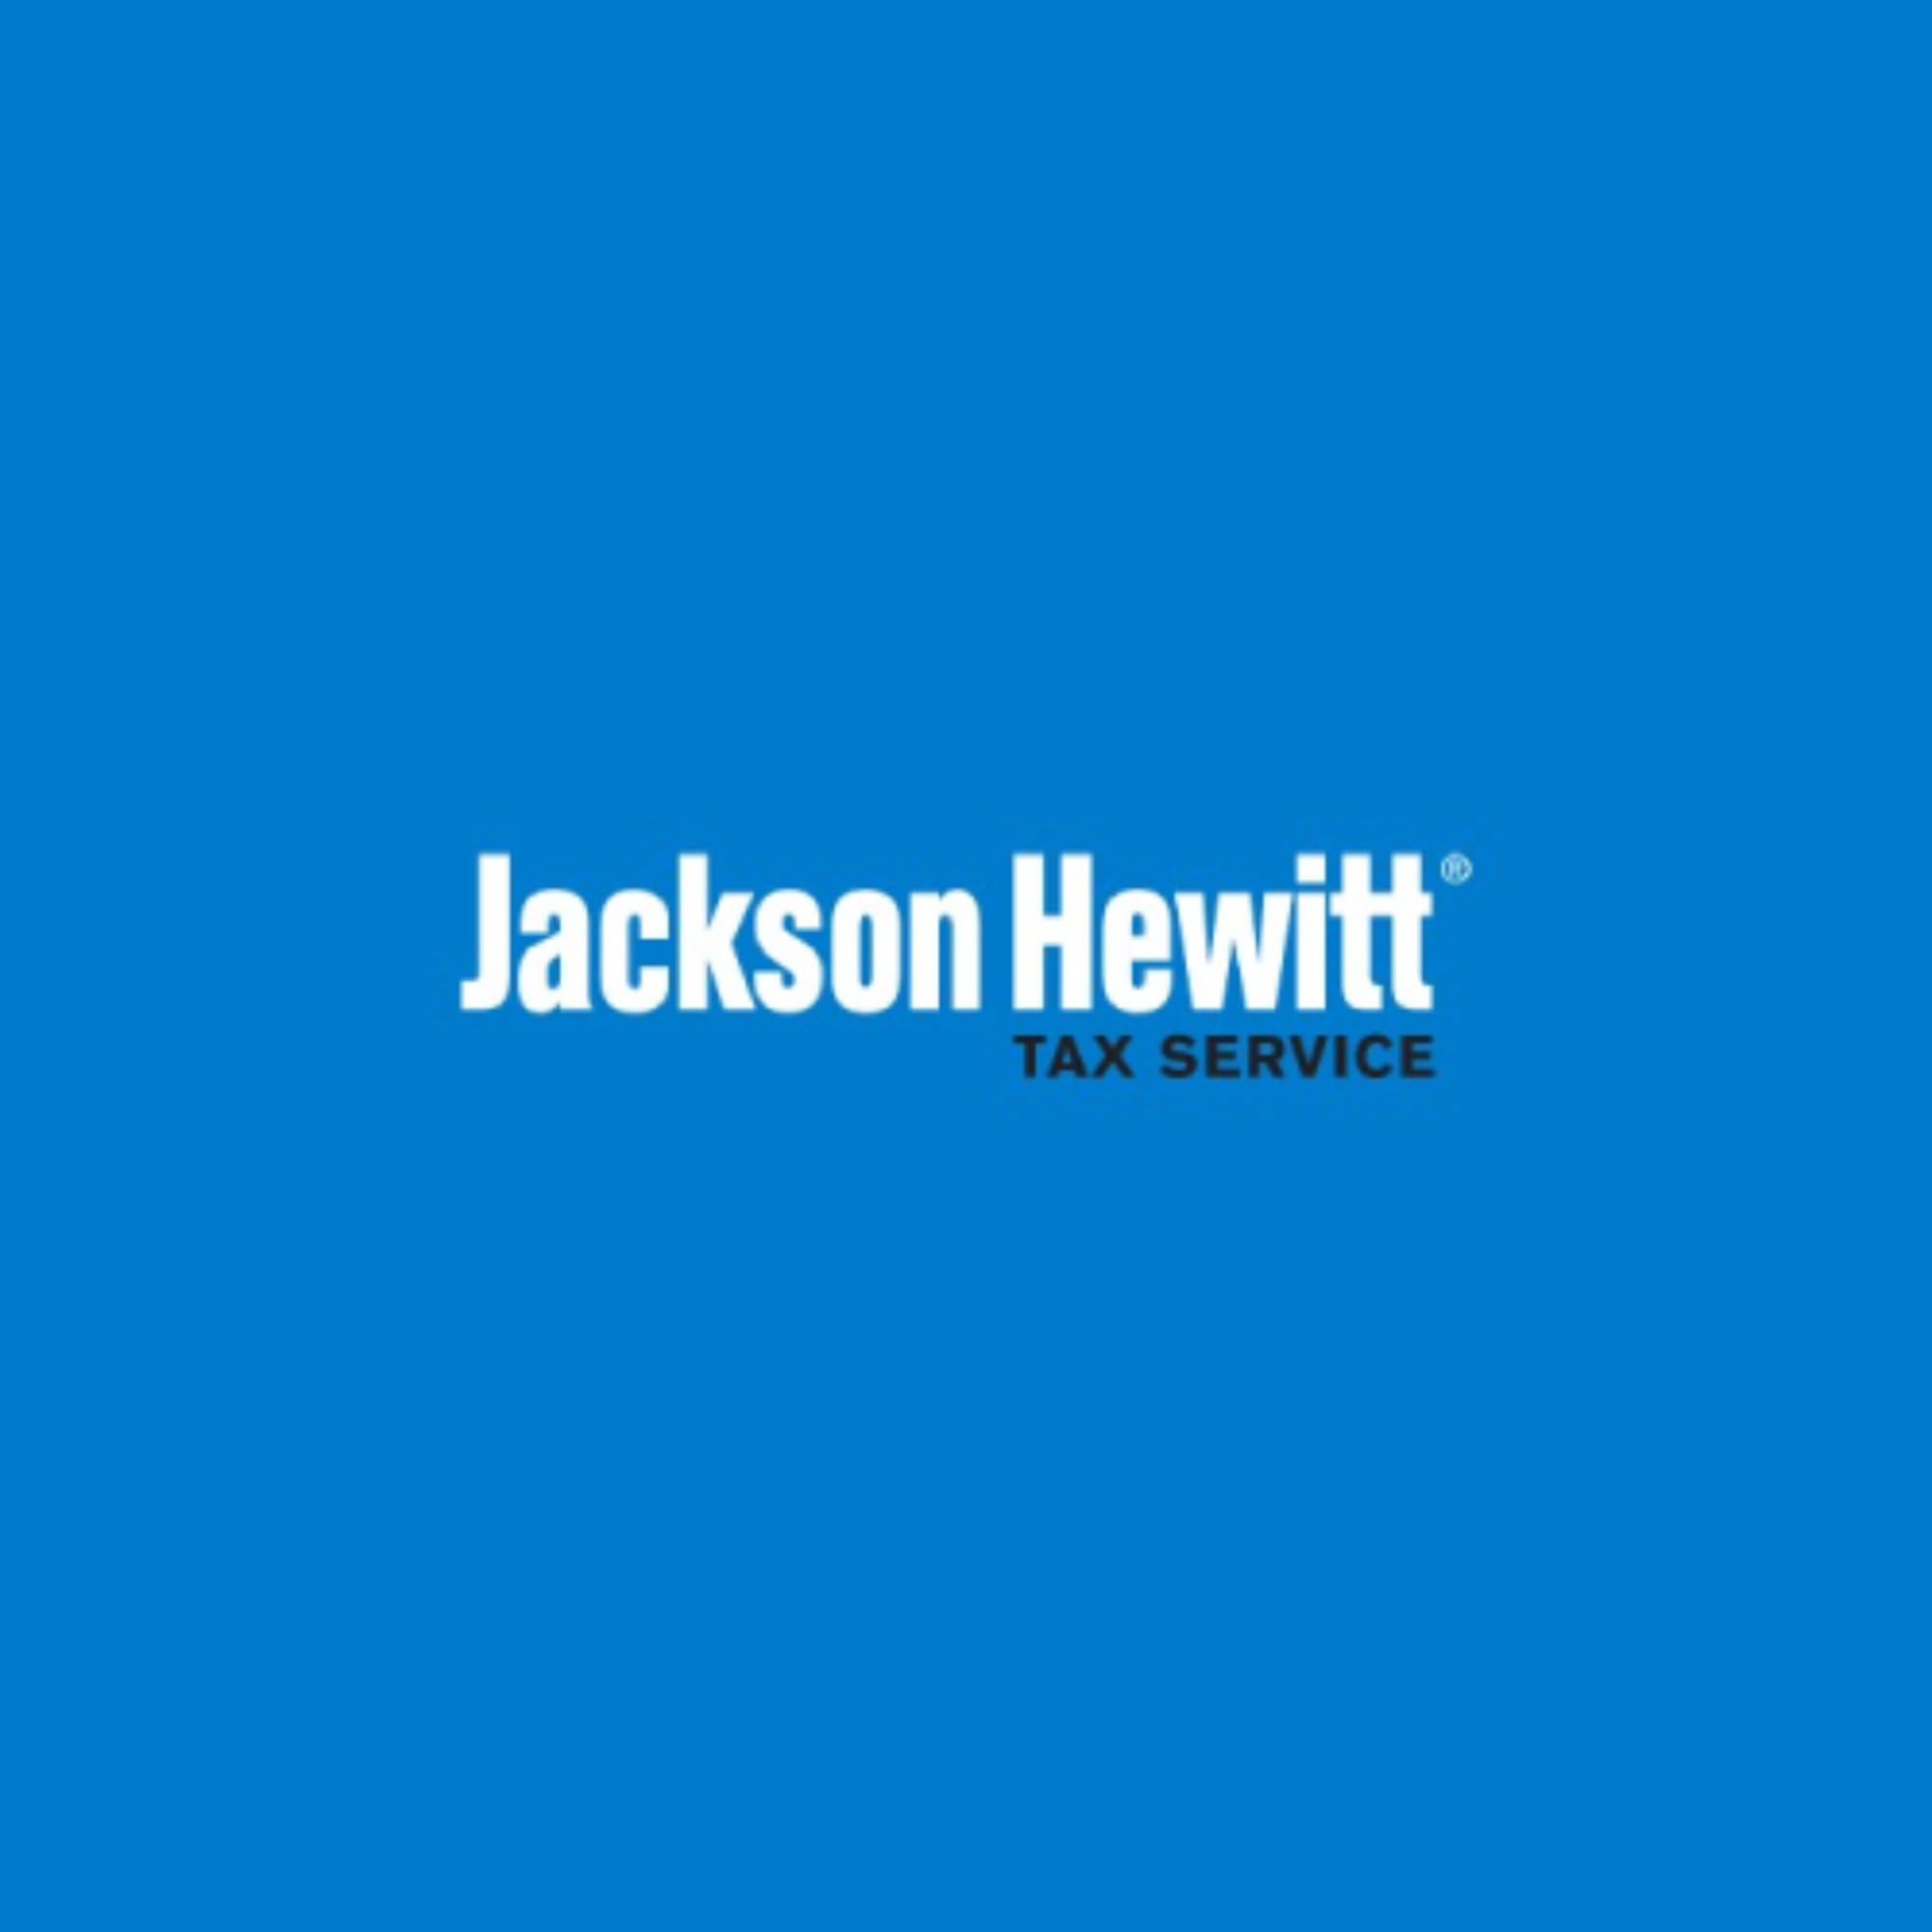 Jackson Hewitt Tax Service 19740 Alberta St, Oneida Tennessee 37841